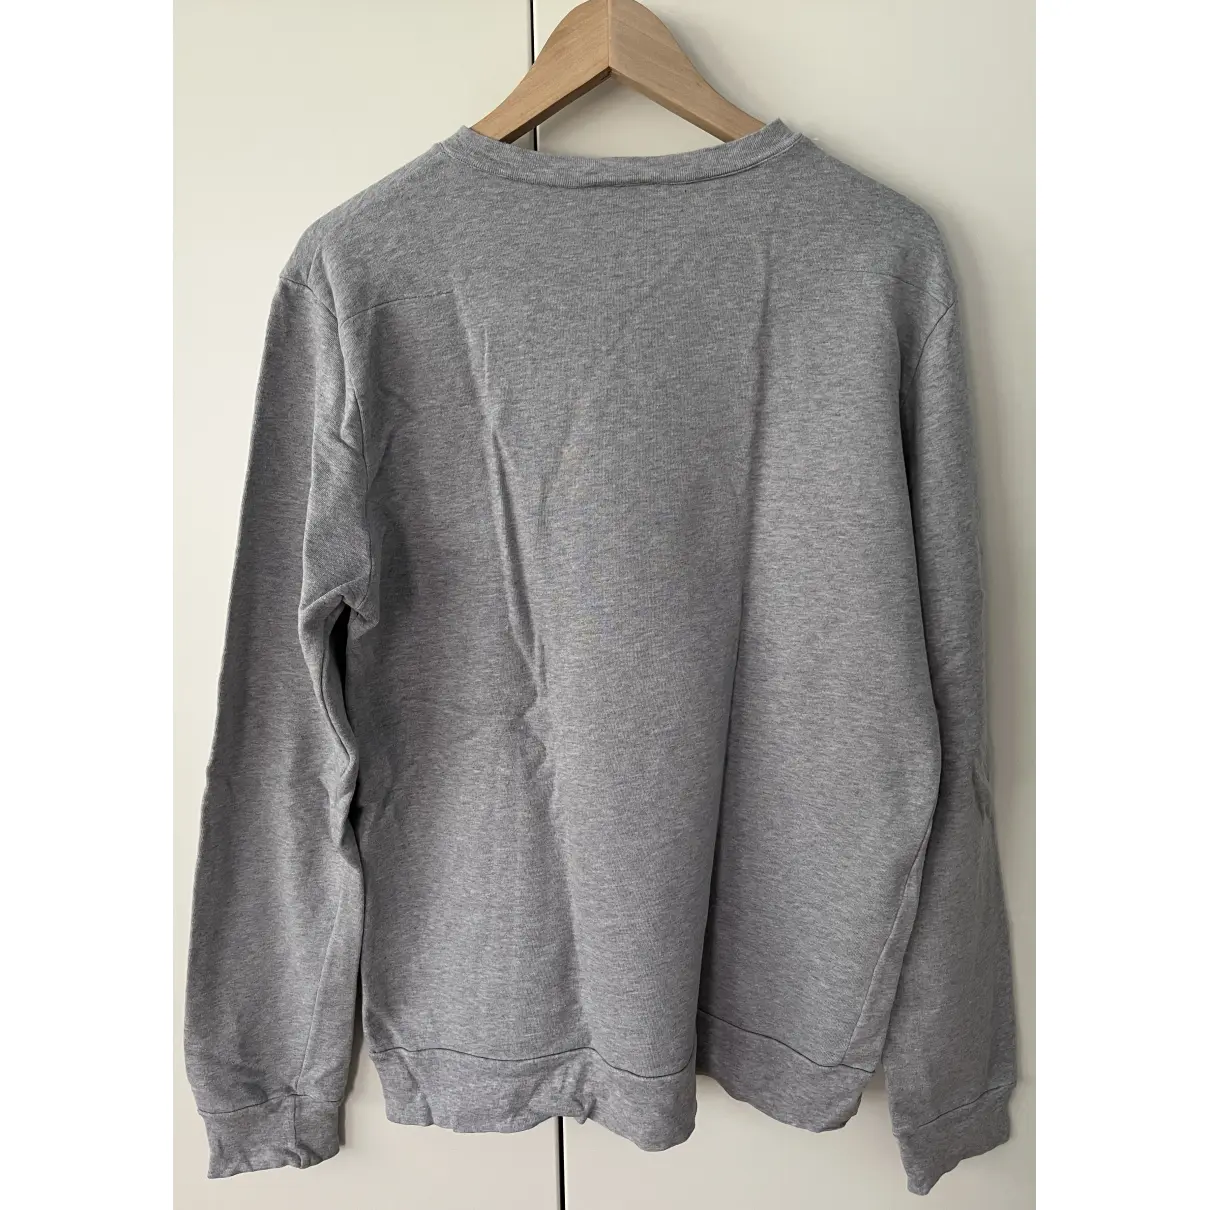 Buy Dior Homme Sweatshirt online - Vintage